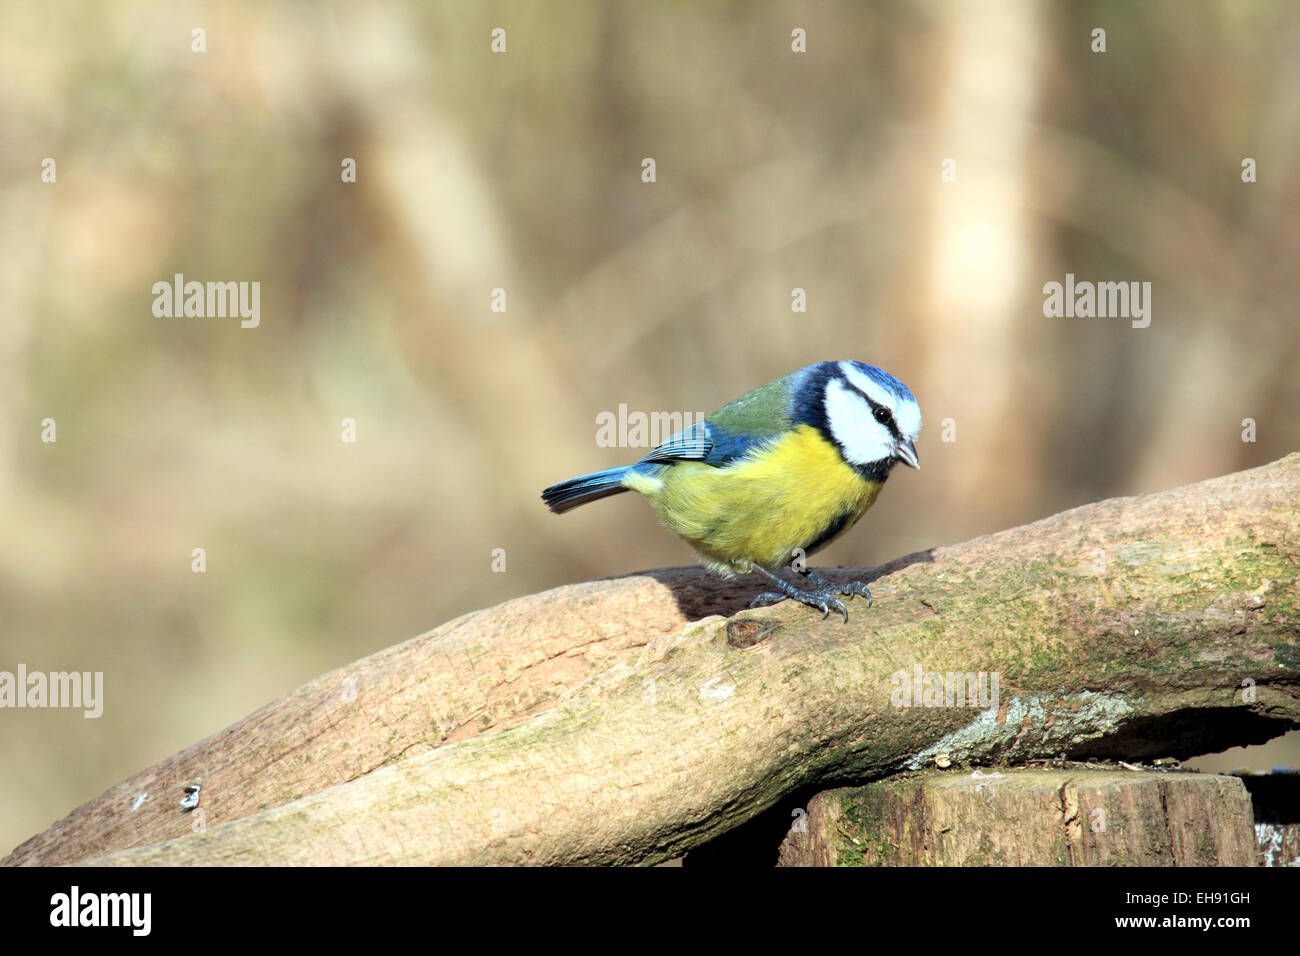 Azul Teta Cyanistes caeruleus pequeñas aves paseriformes de woodlandd y hedgrerow con corona azul característico Foto de stock